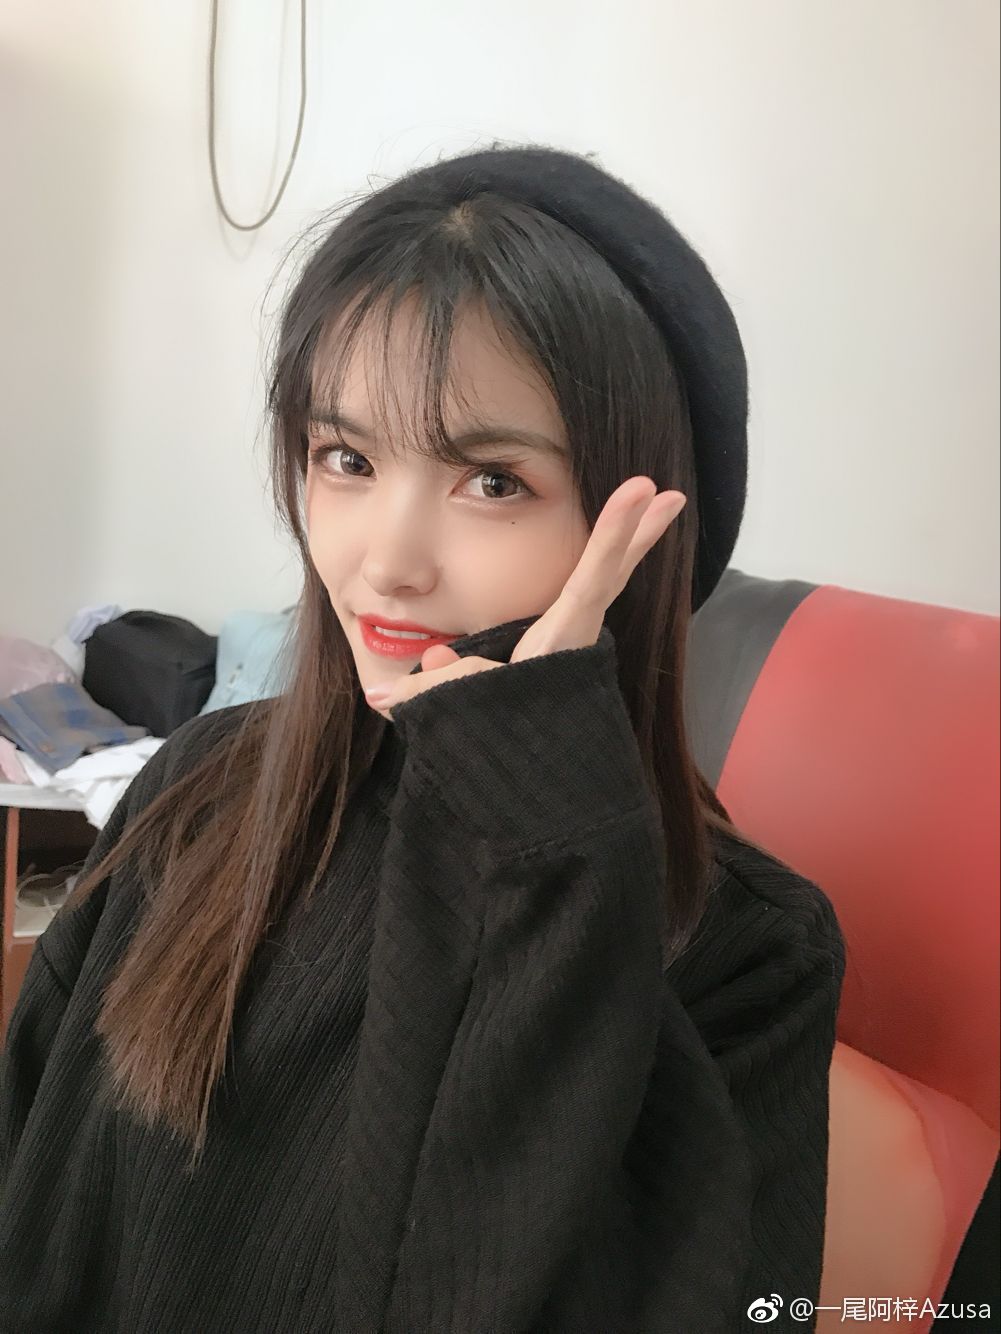 Azusa Weibo may 159, 2019